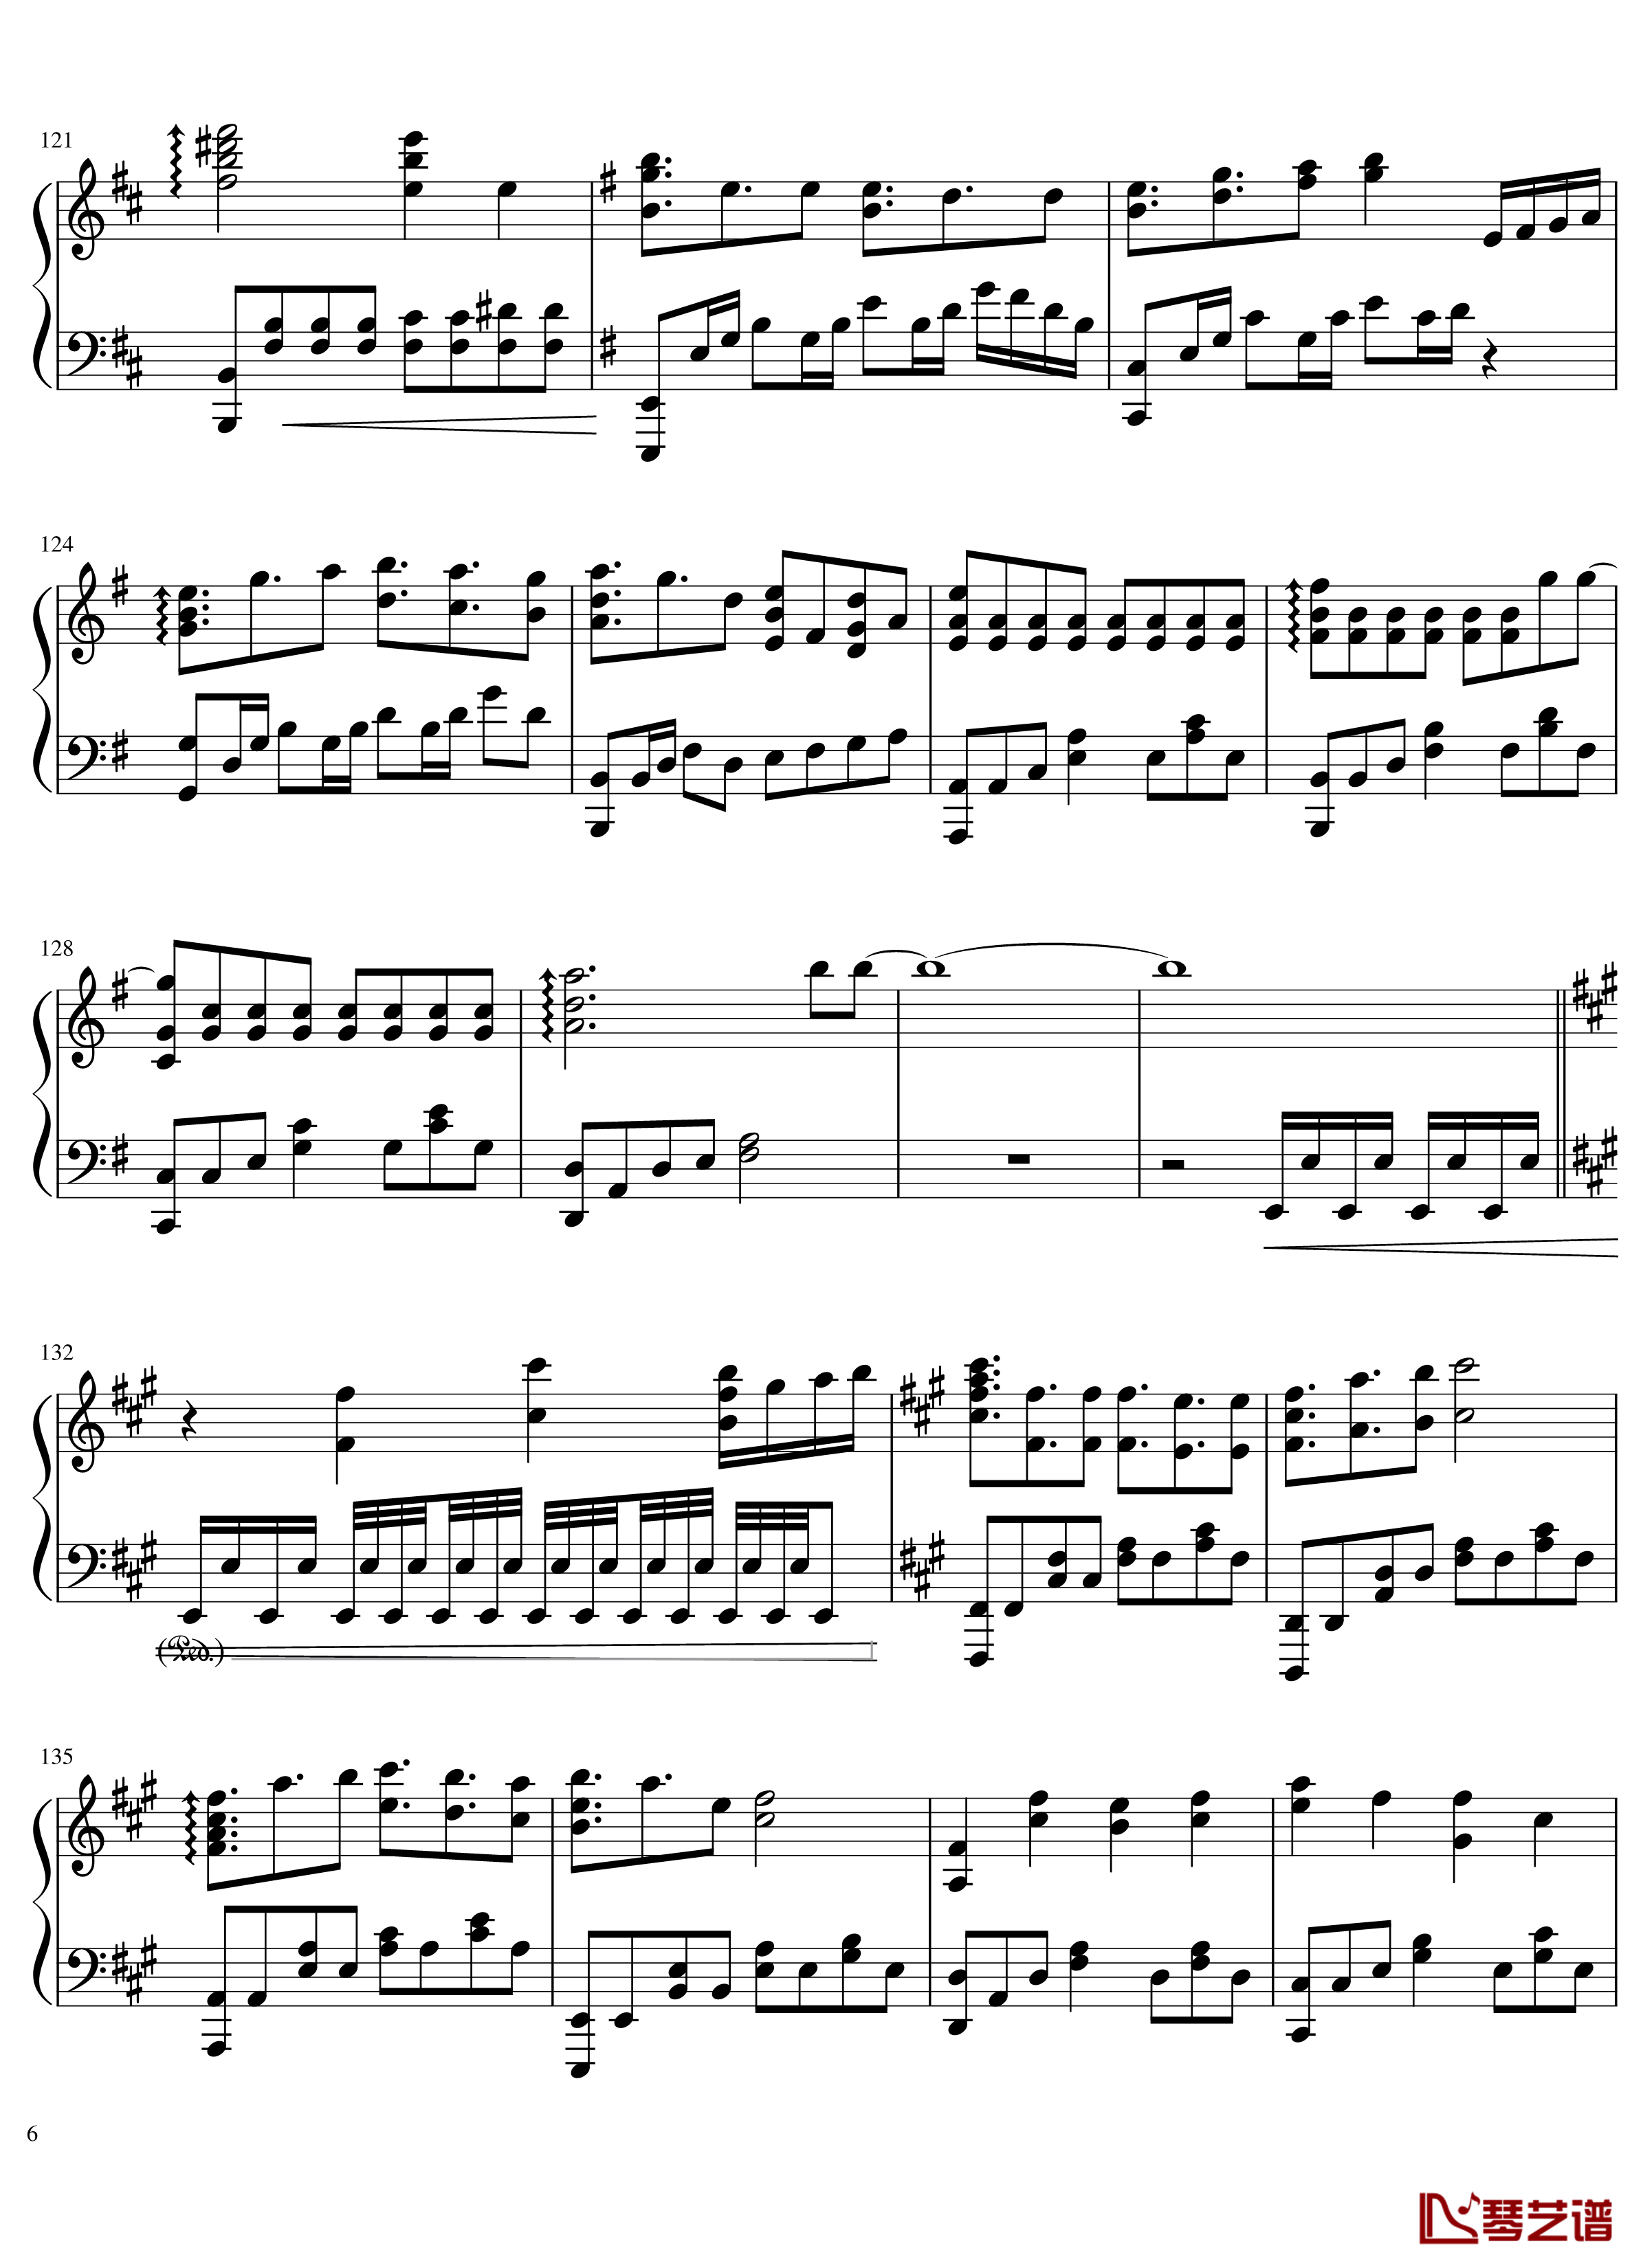 There is a reason钢琴谱-nogamenolife6